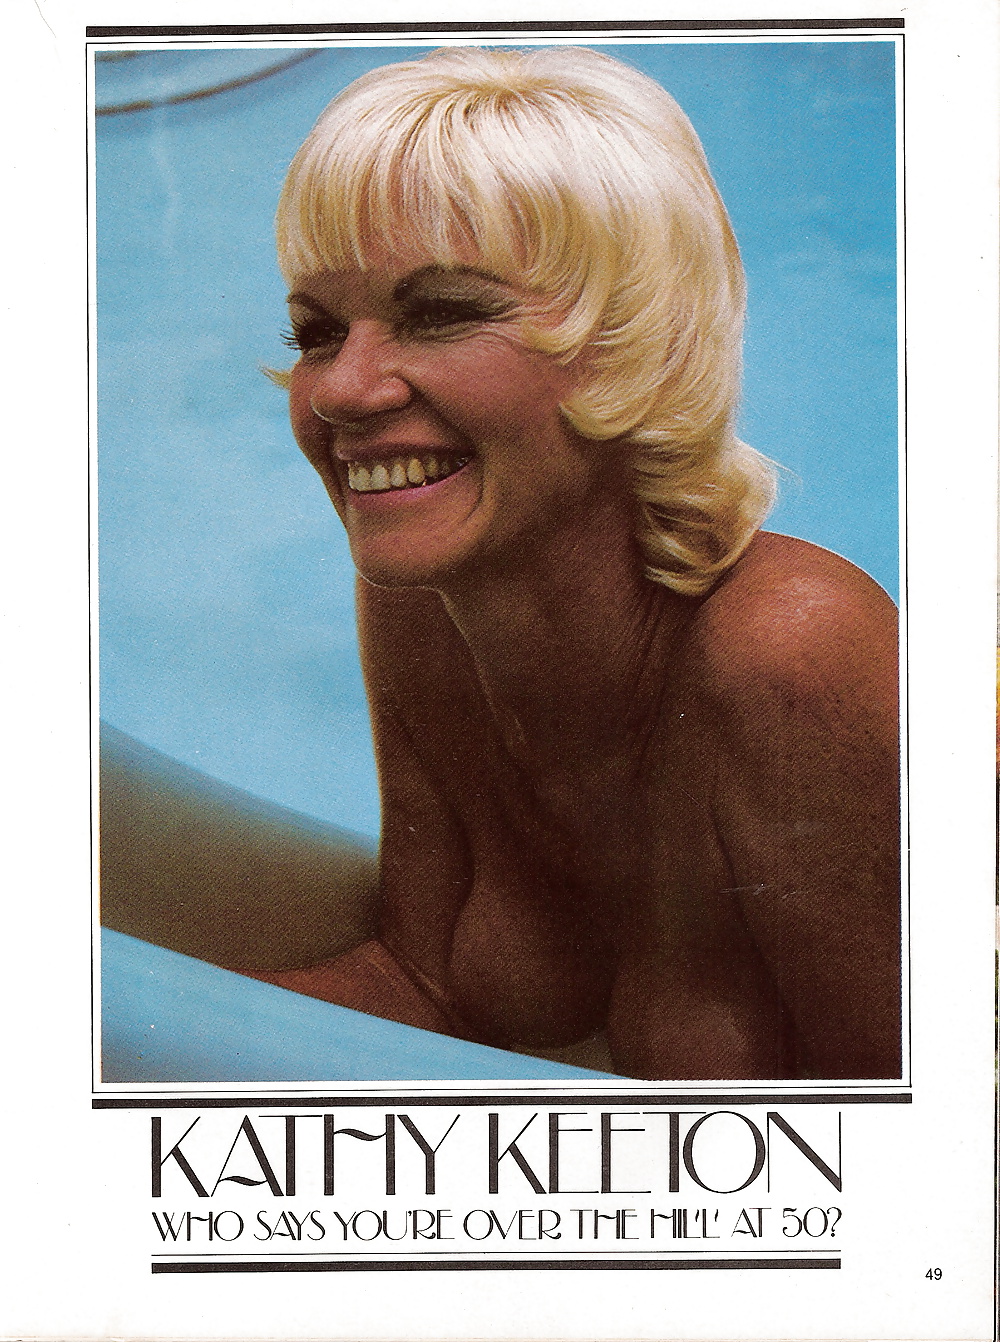 Hustler - settembre 1975 - kathy keeton - oltre la collina a 50 anni?
 #27250986